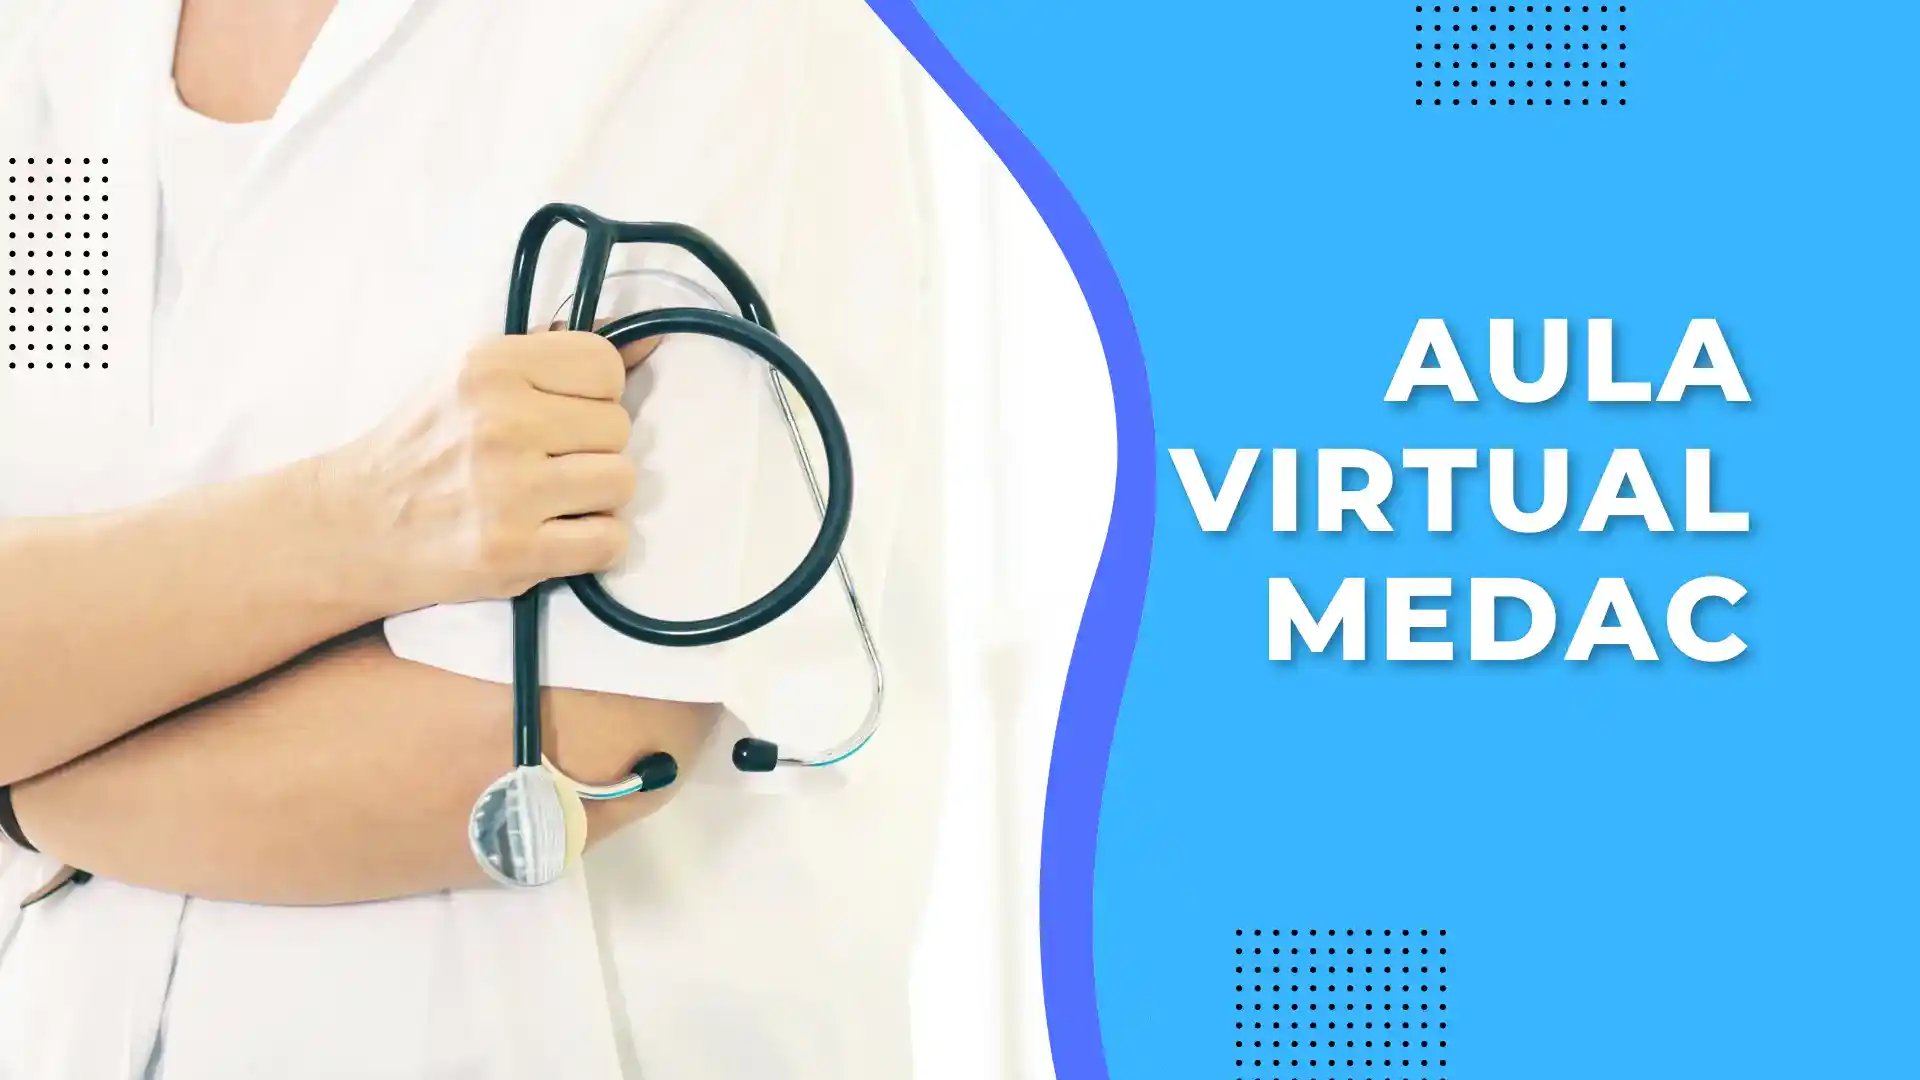 Aula Virtual Medac